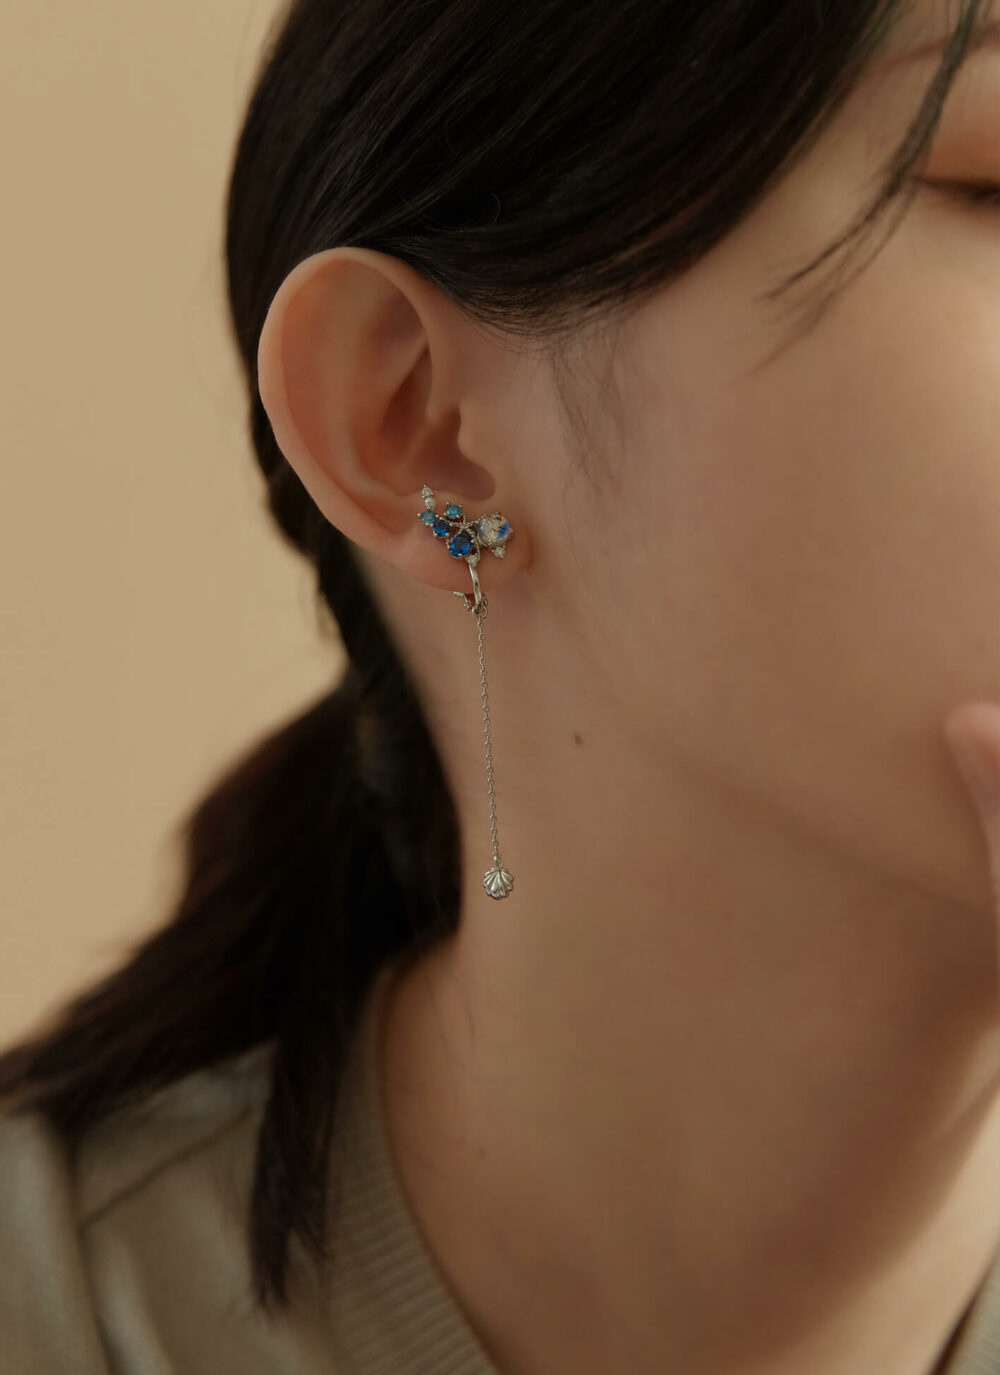 Eco安珂,韓國飾品,韓國耳環,韓國耳骨夾,垂墜耳環,螺旋夾耳環,可調式耳夾耳環,螺旋夾垂墜耳環,沙灘耳環